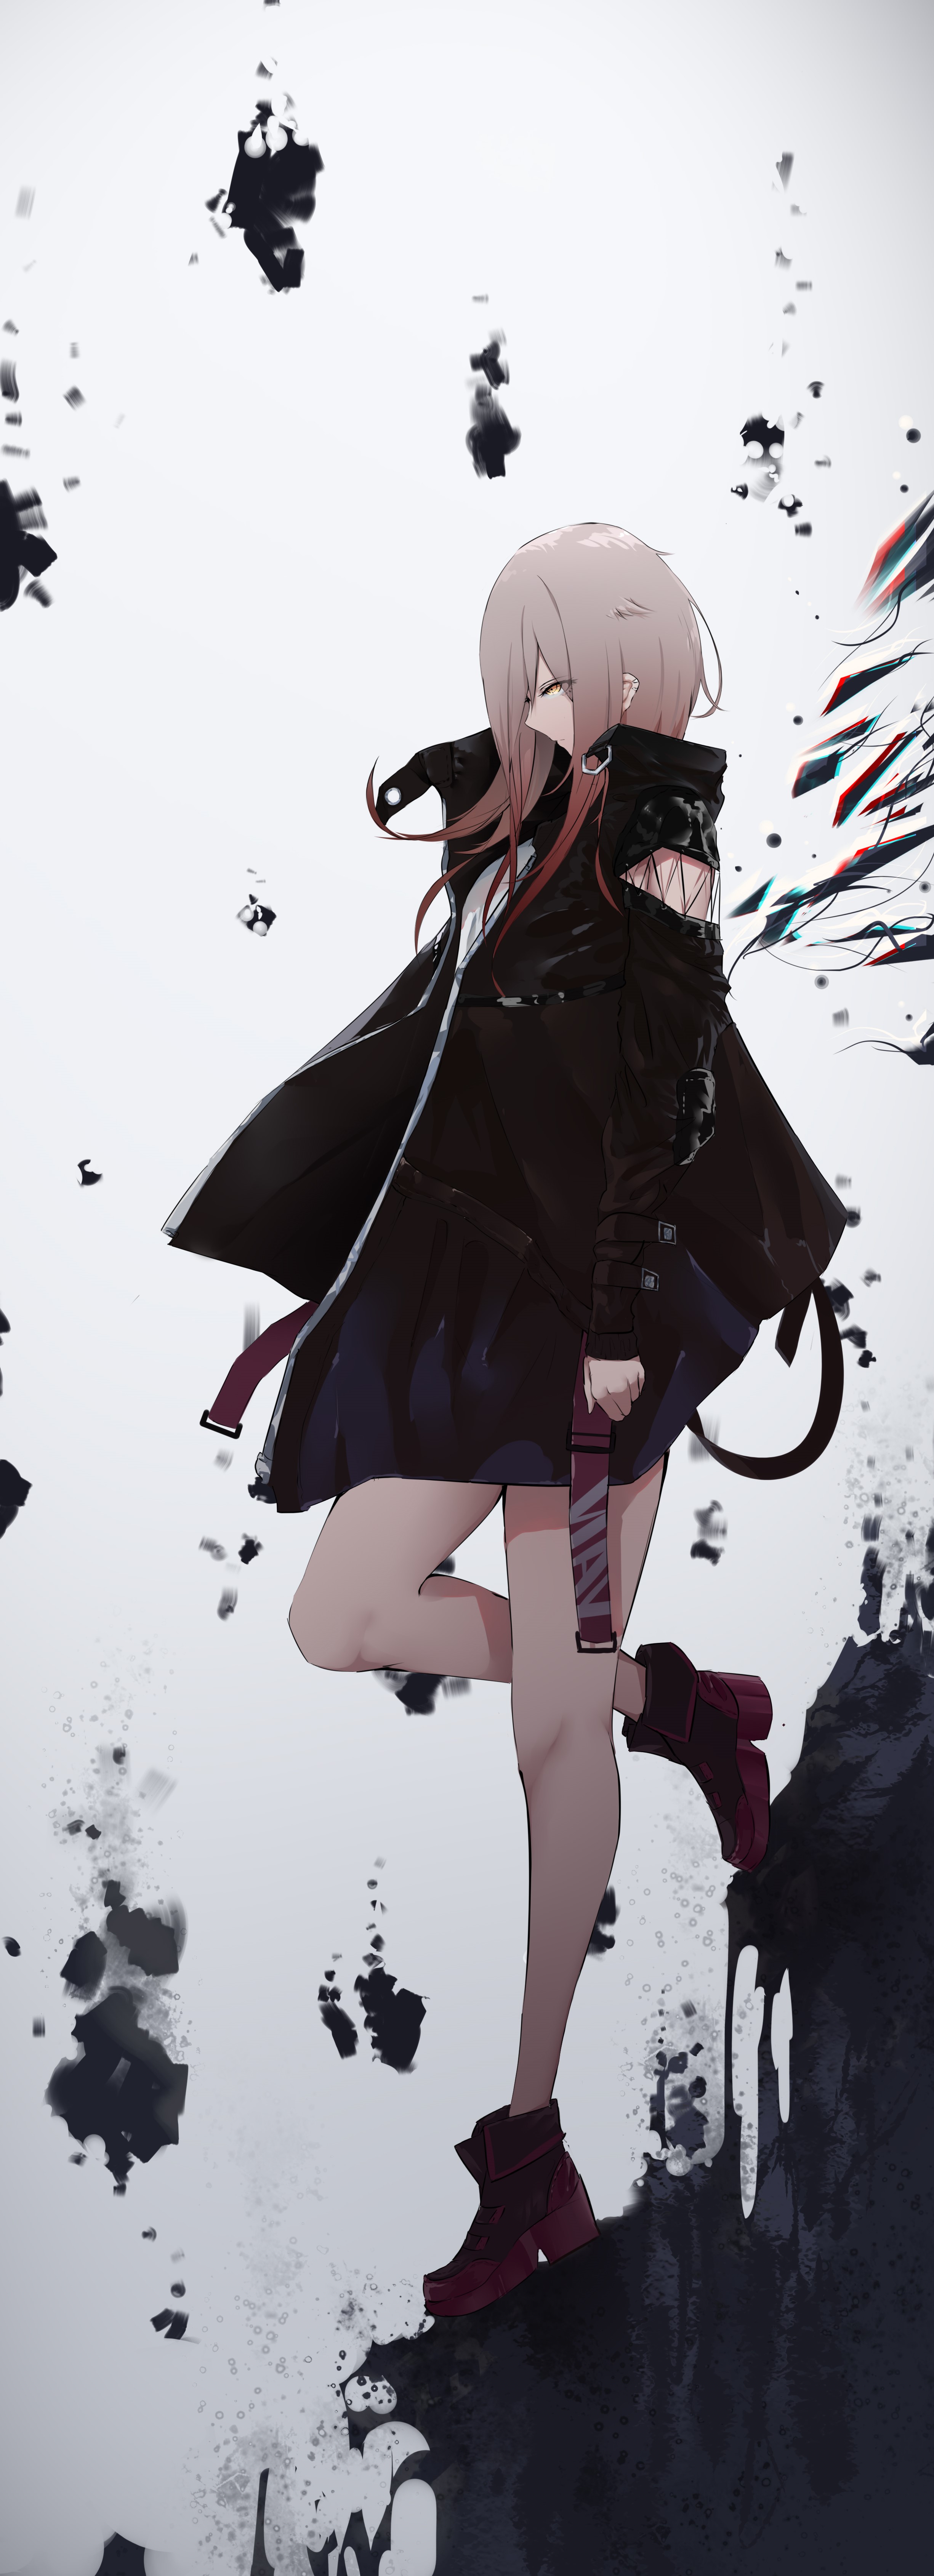 Anime Girl Portrait Wallpapers